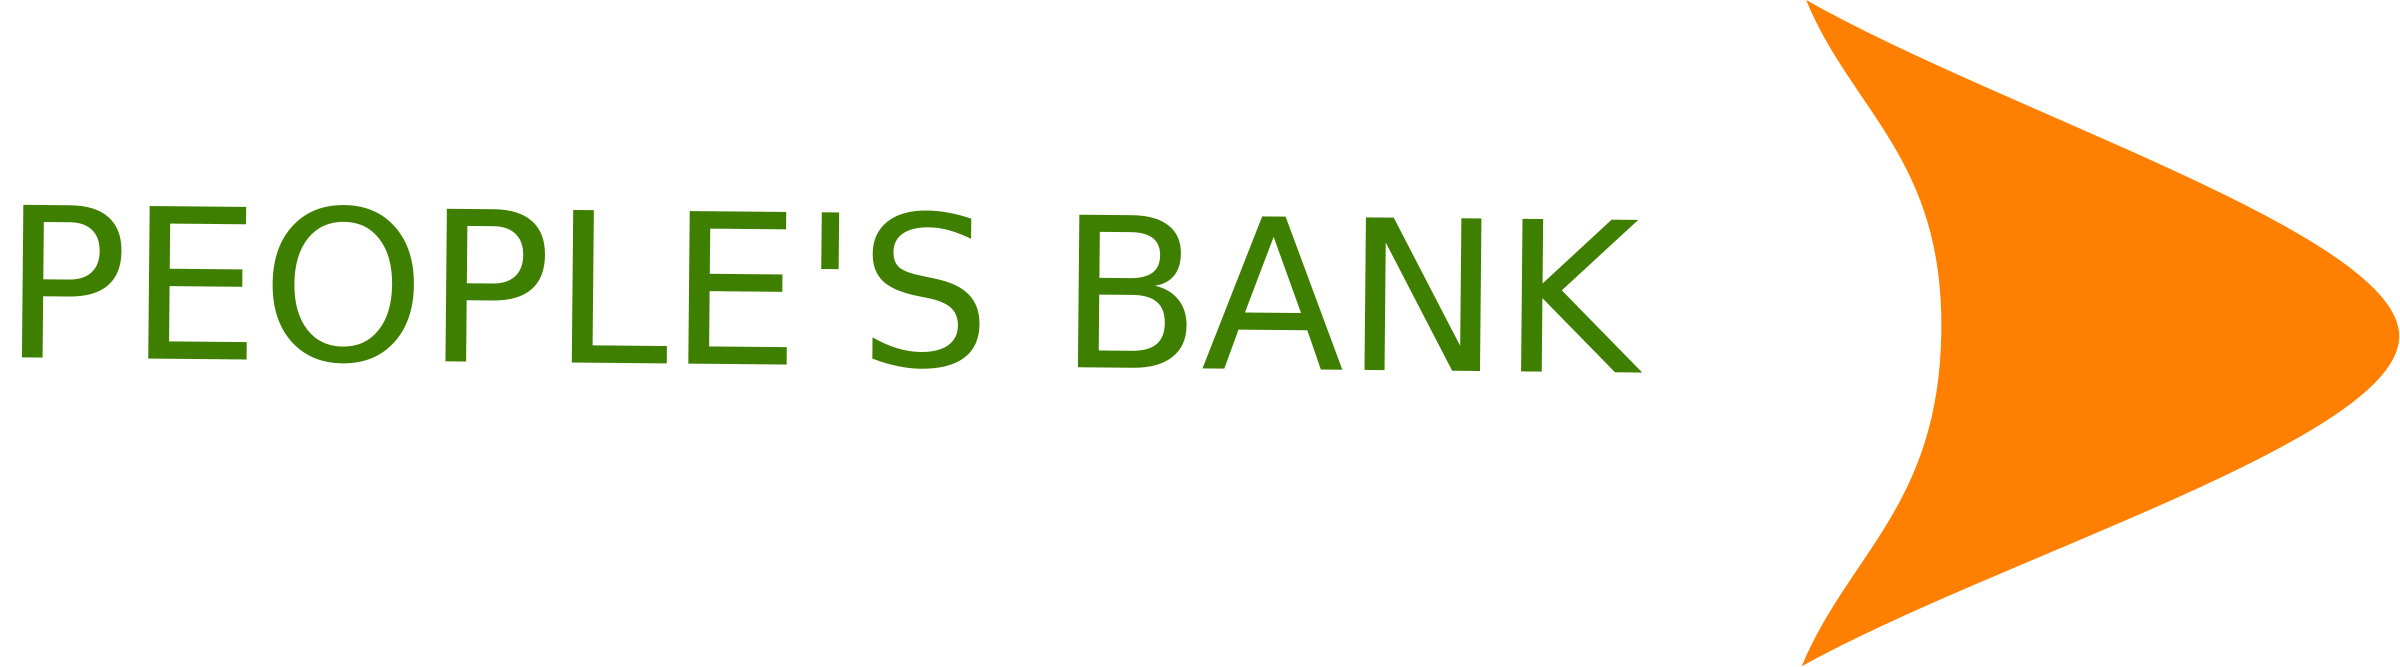 Green Bank Logo - People's Bank Logo SVG Vector & PNG Transparent - Vector Logo Supply